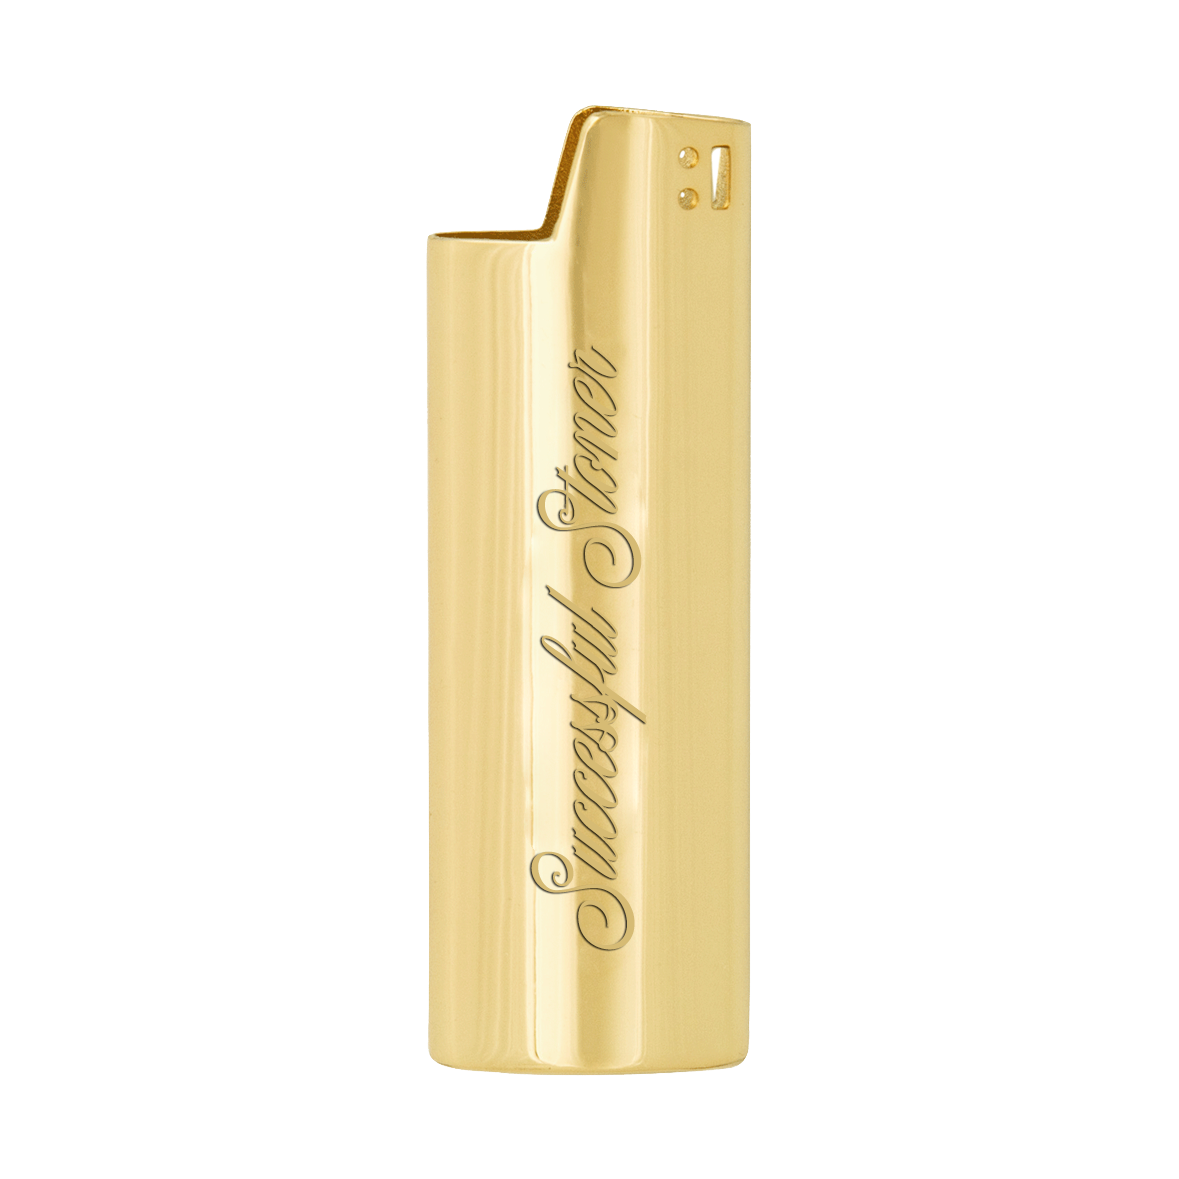 Successful Stoner™ Lighter Case